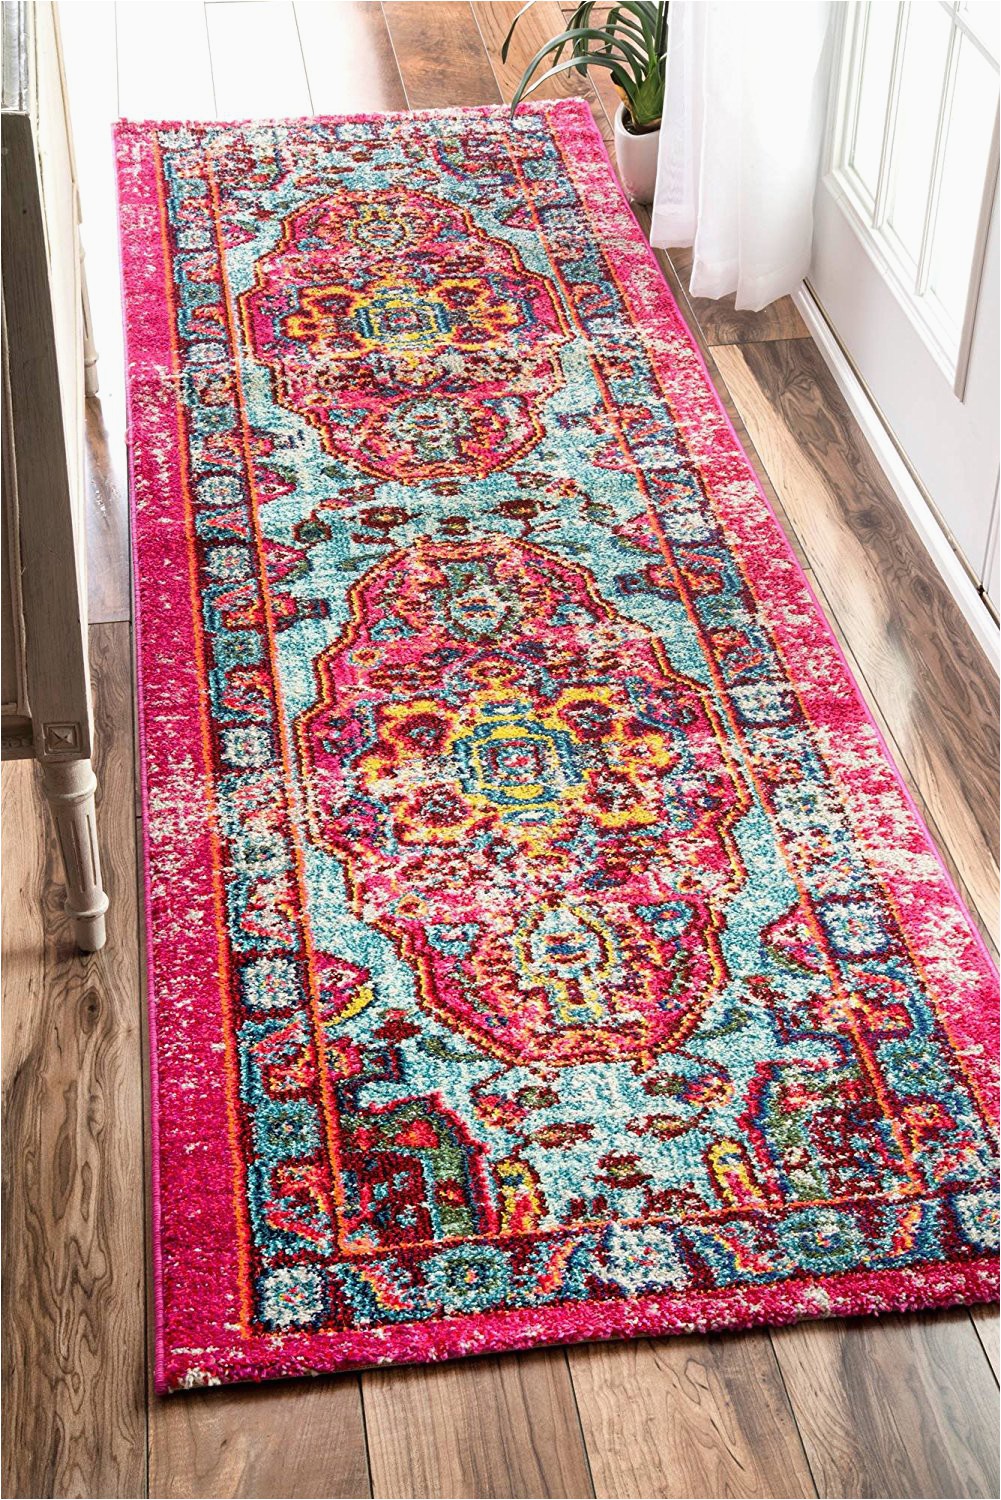 2x8 nuloom oriental vintage distressed abstract runner area rug